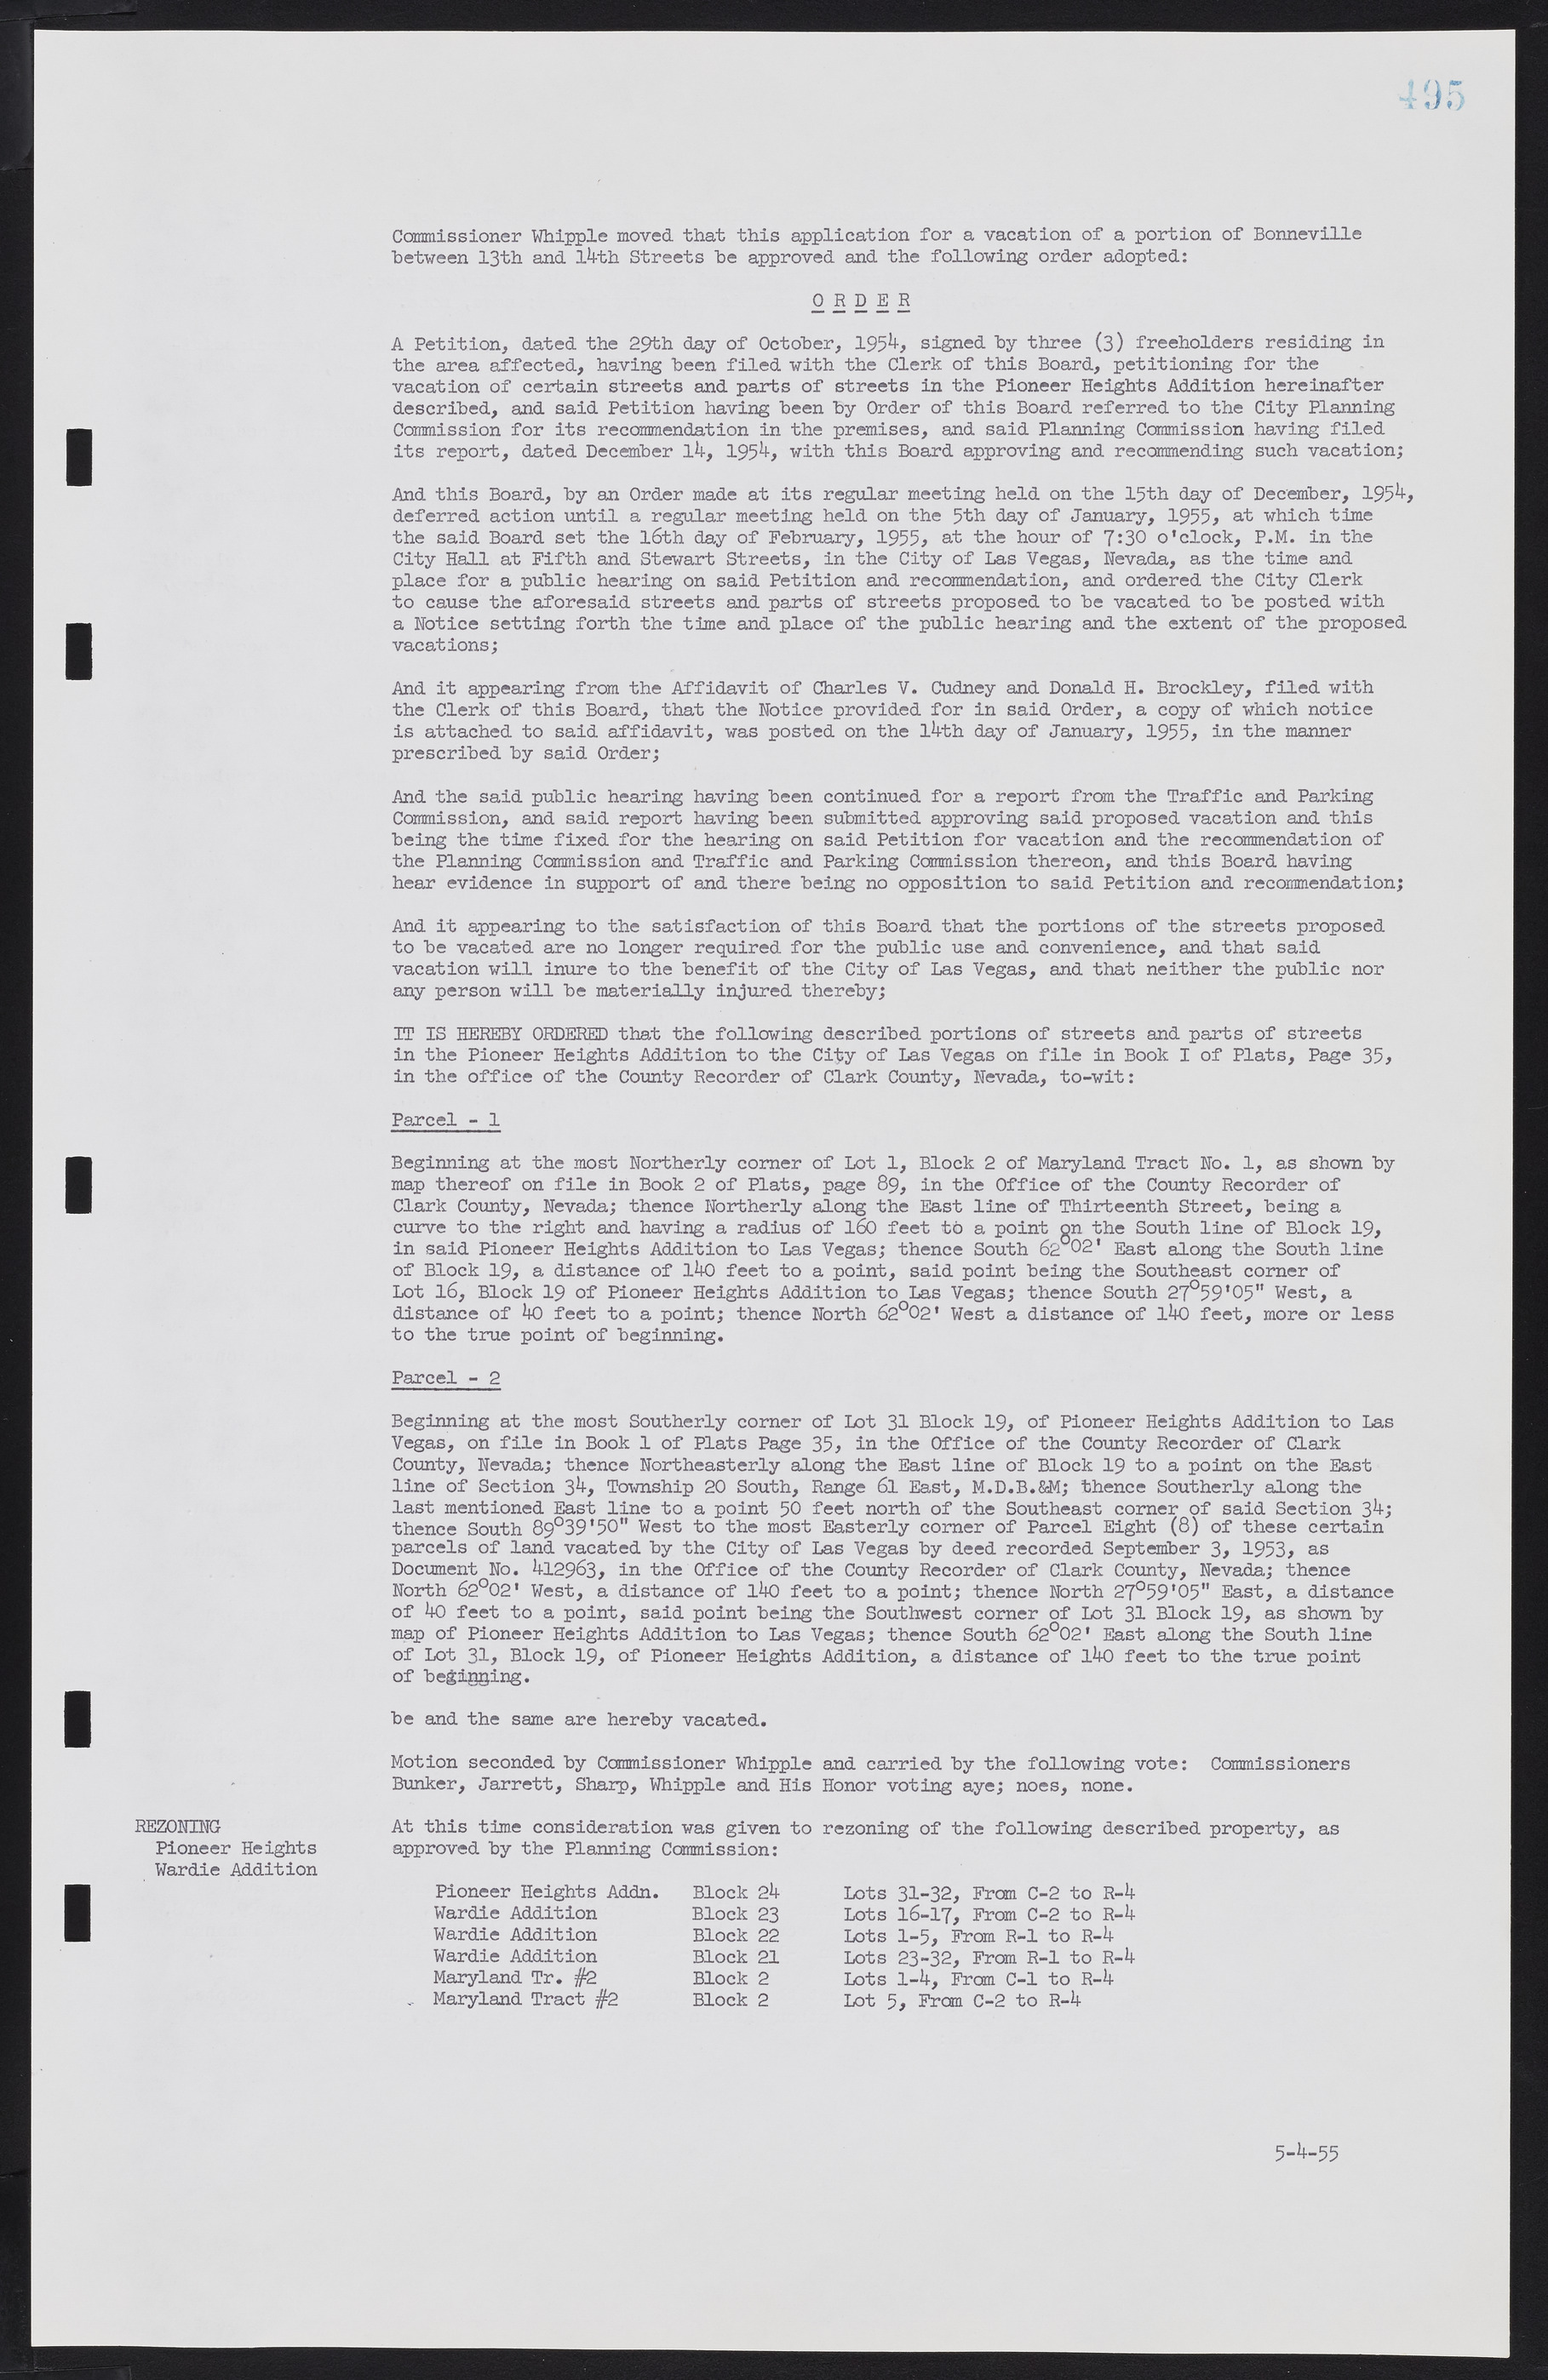 Las Vegas City Commission Minutes, February 17, 1954 to September 21, 1955, lvc000009-501